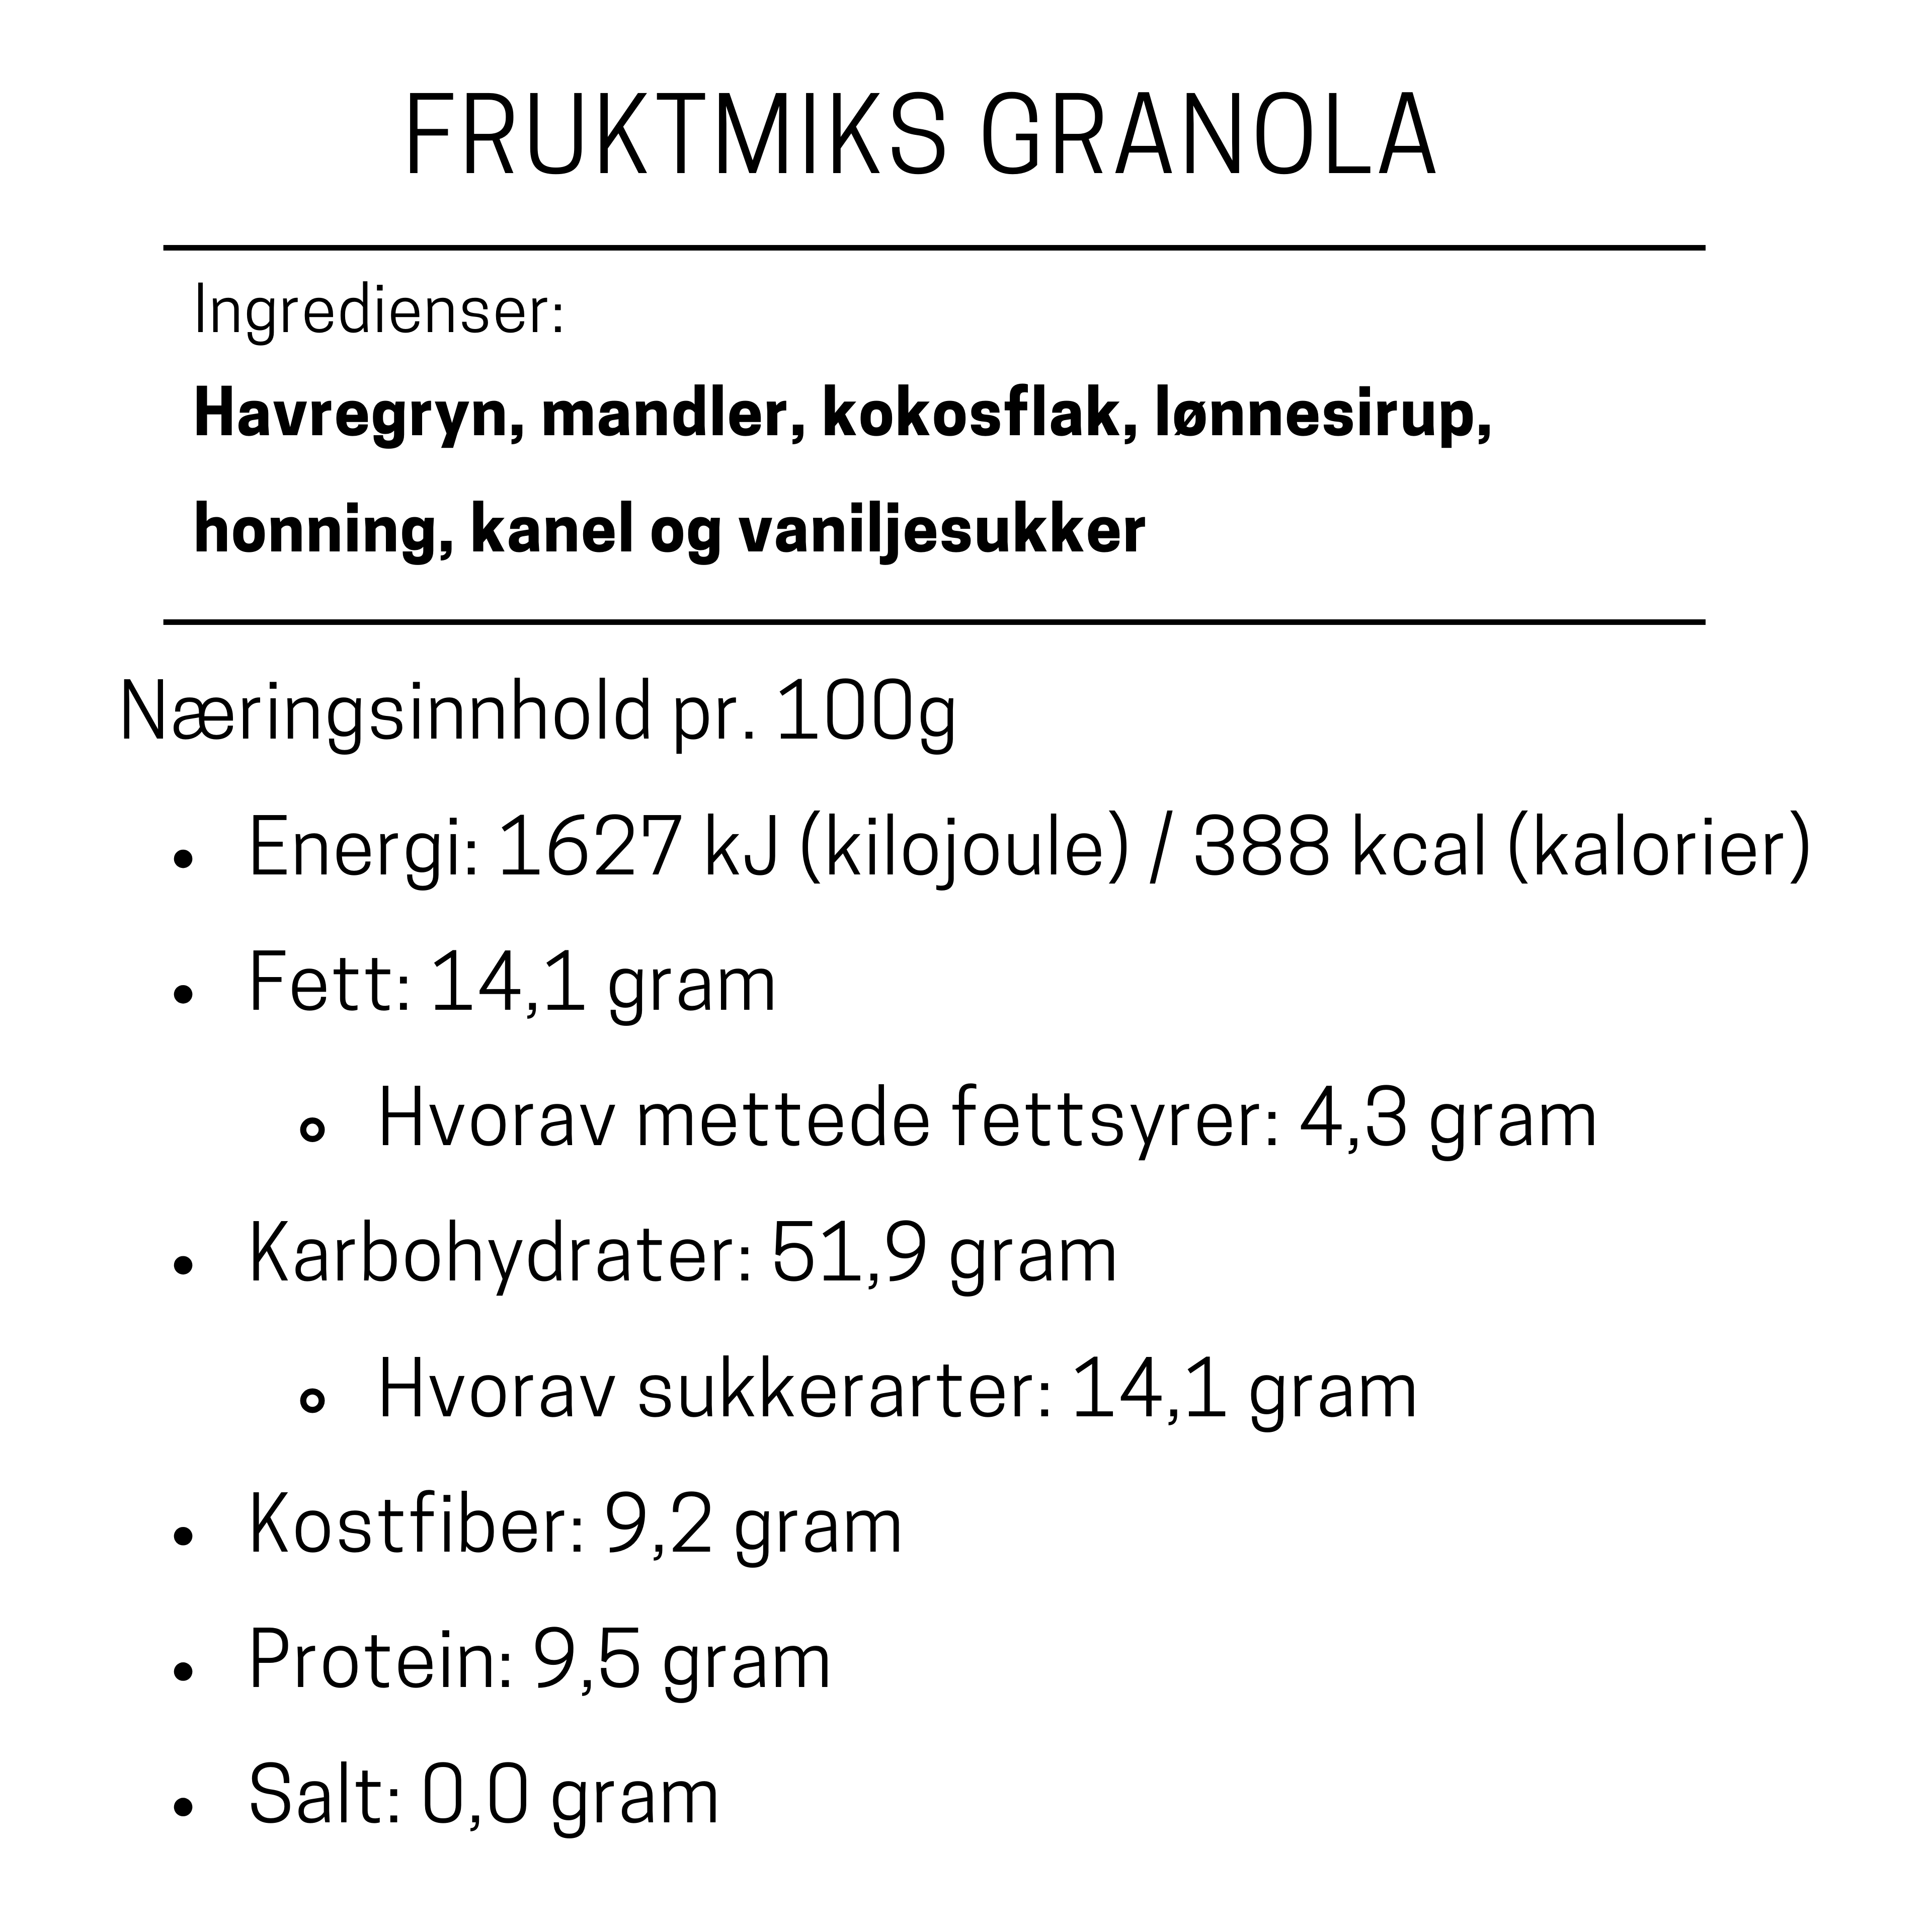 Granola - Fruktmiks